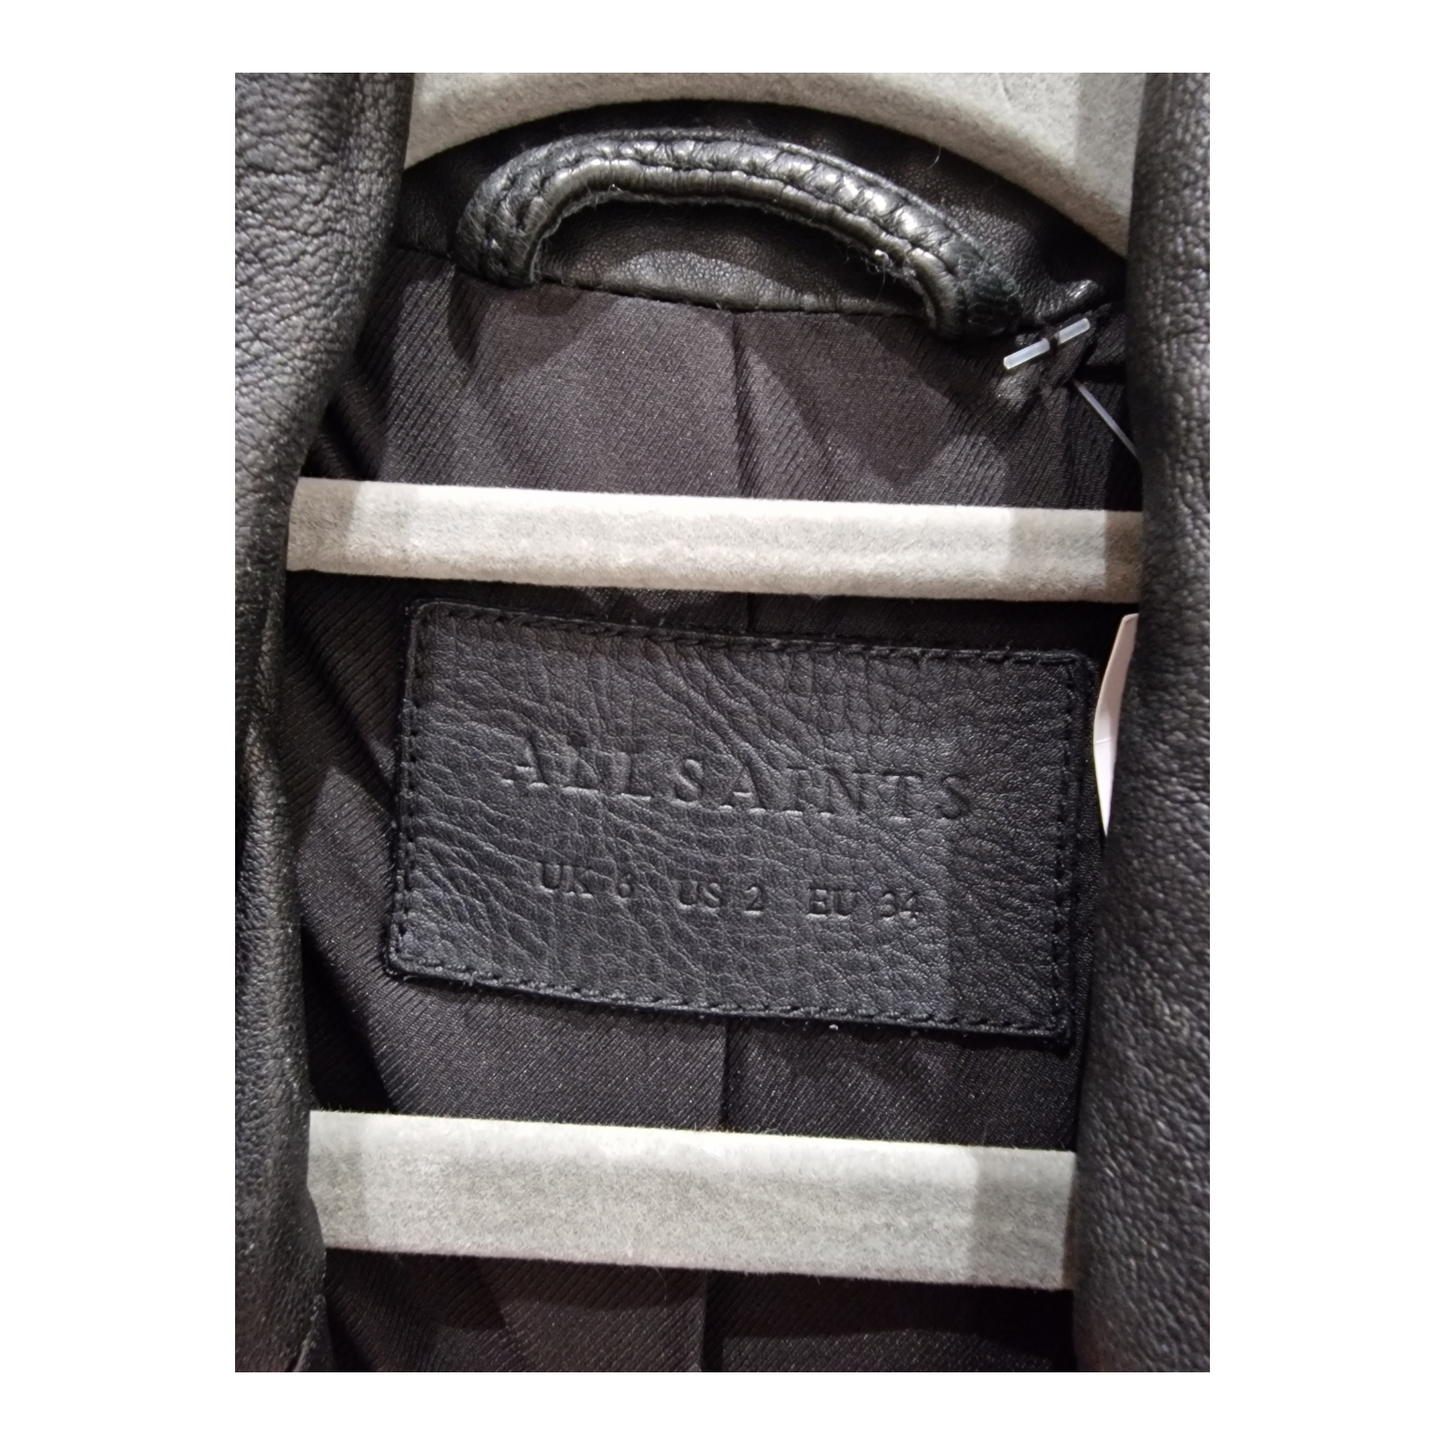 All Saint's Black Cargo Biker Jacket, size 6